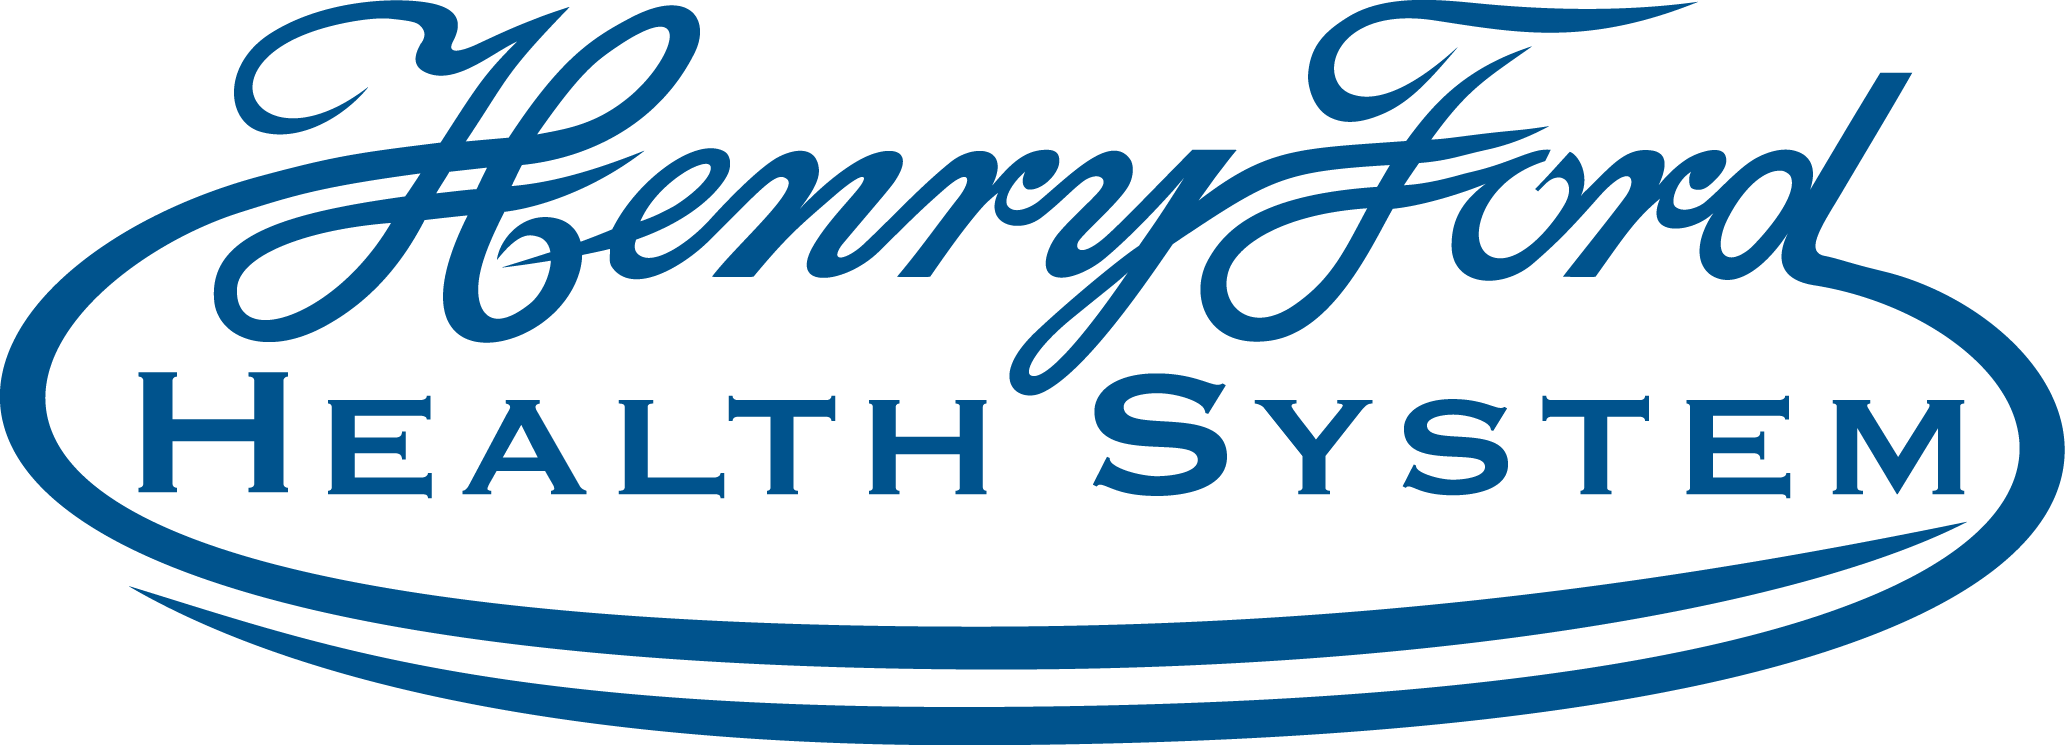 Henry Ford Health System Internal Medicine Grand Rounds - Henry Ford Health System Clipart (2065x745), Png Download